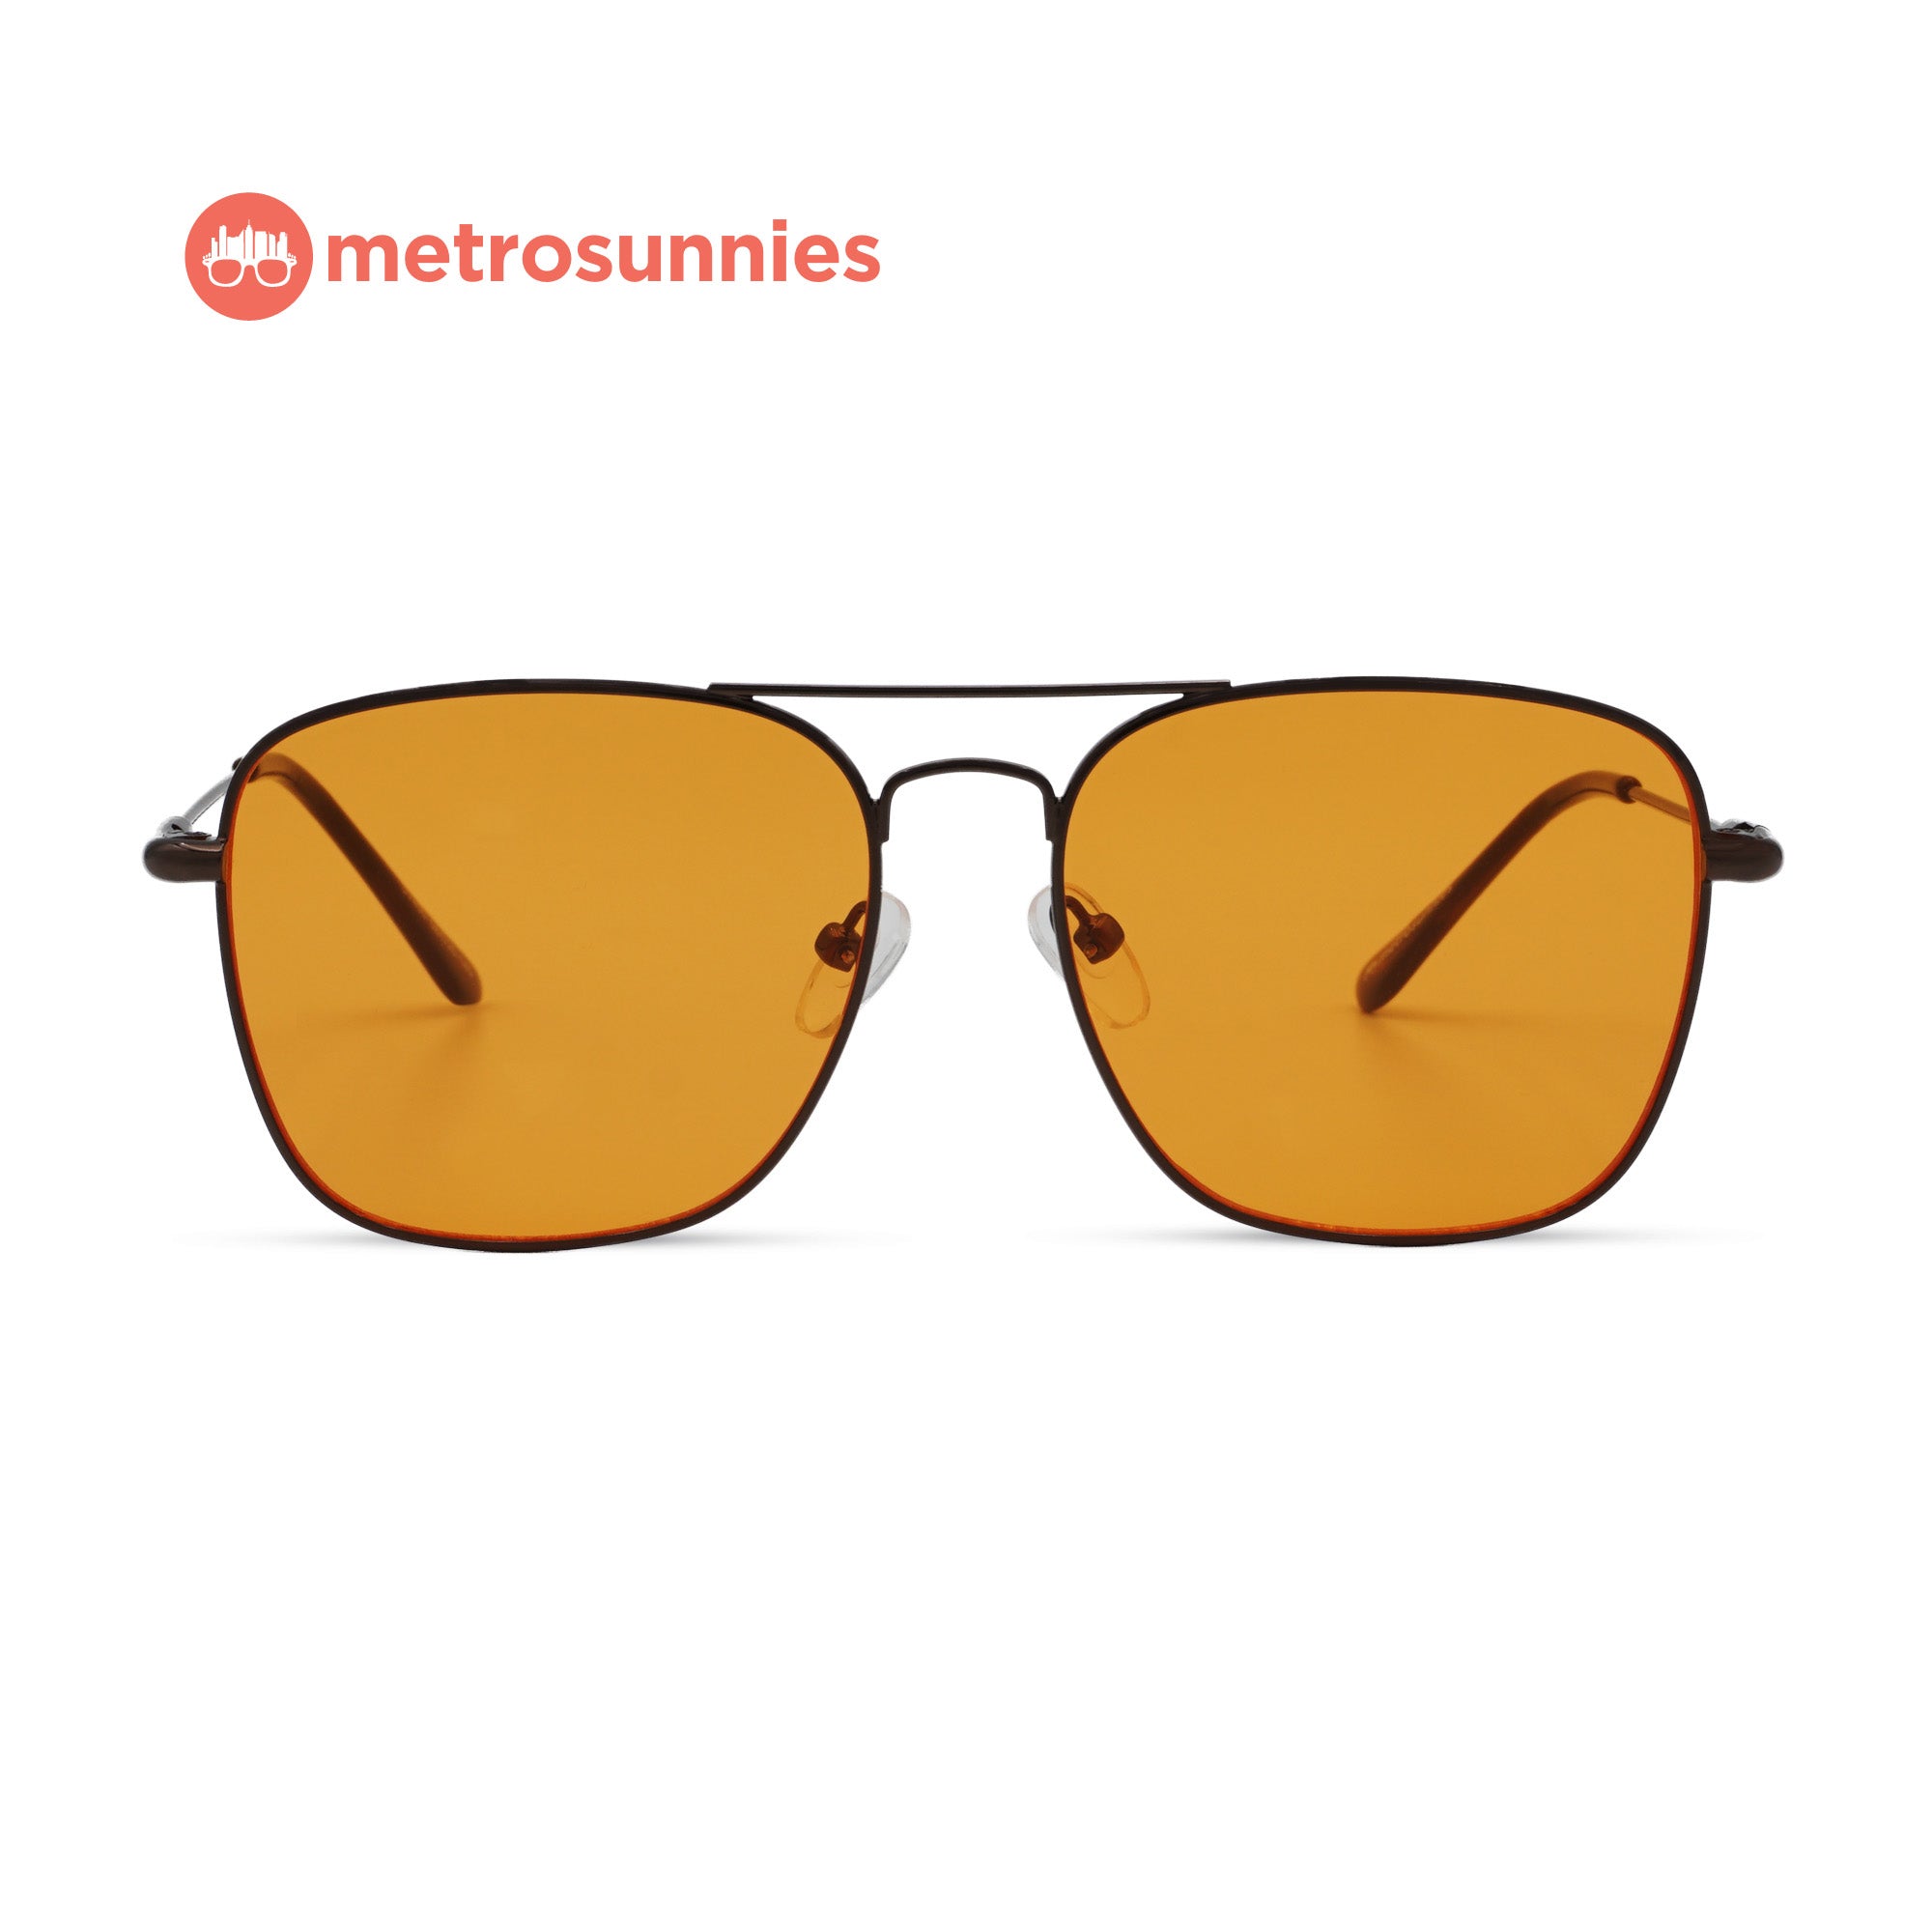 MetroSunnies Freddie Sunnies (Apricot) / Sunglasses with UV400 Protection / Fashion Eyewear Unisex